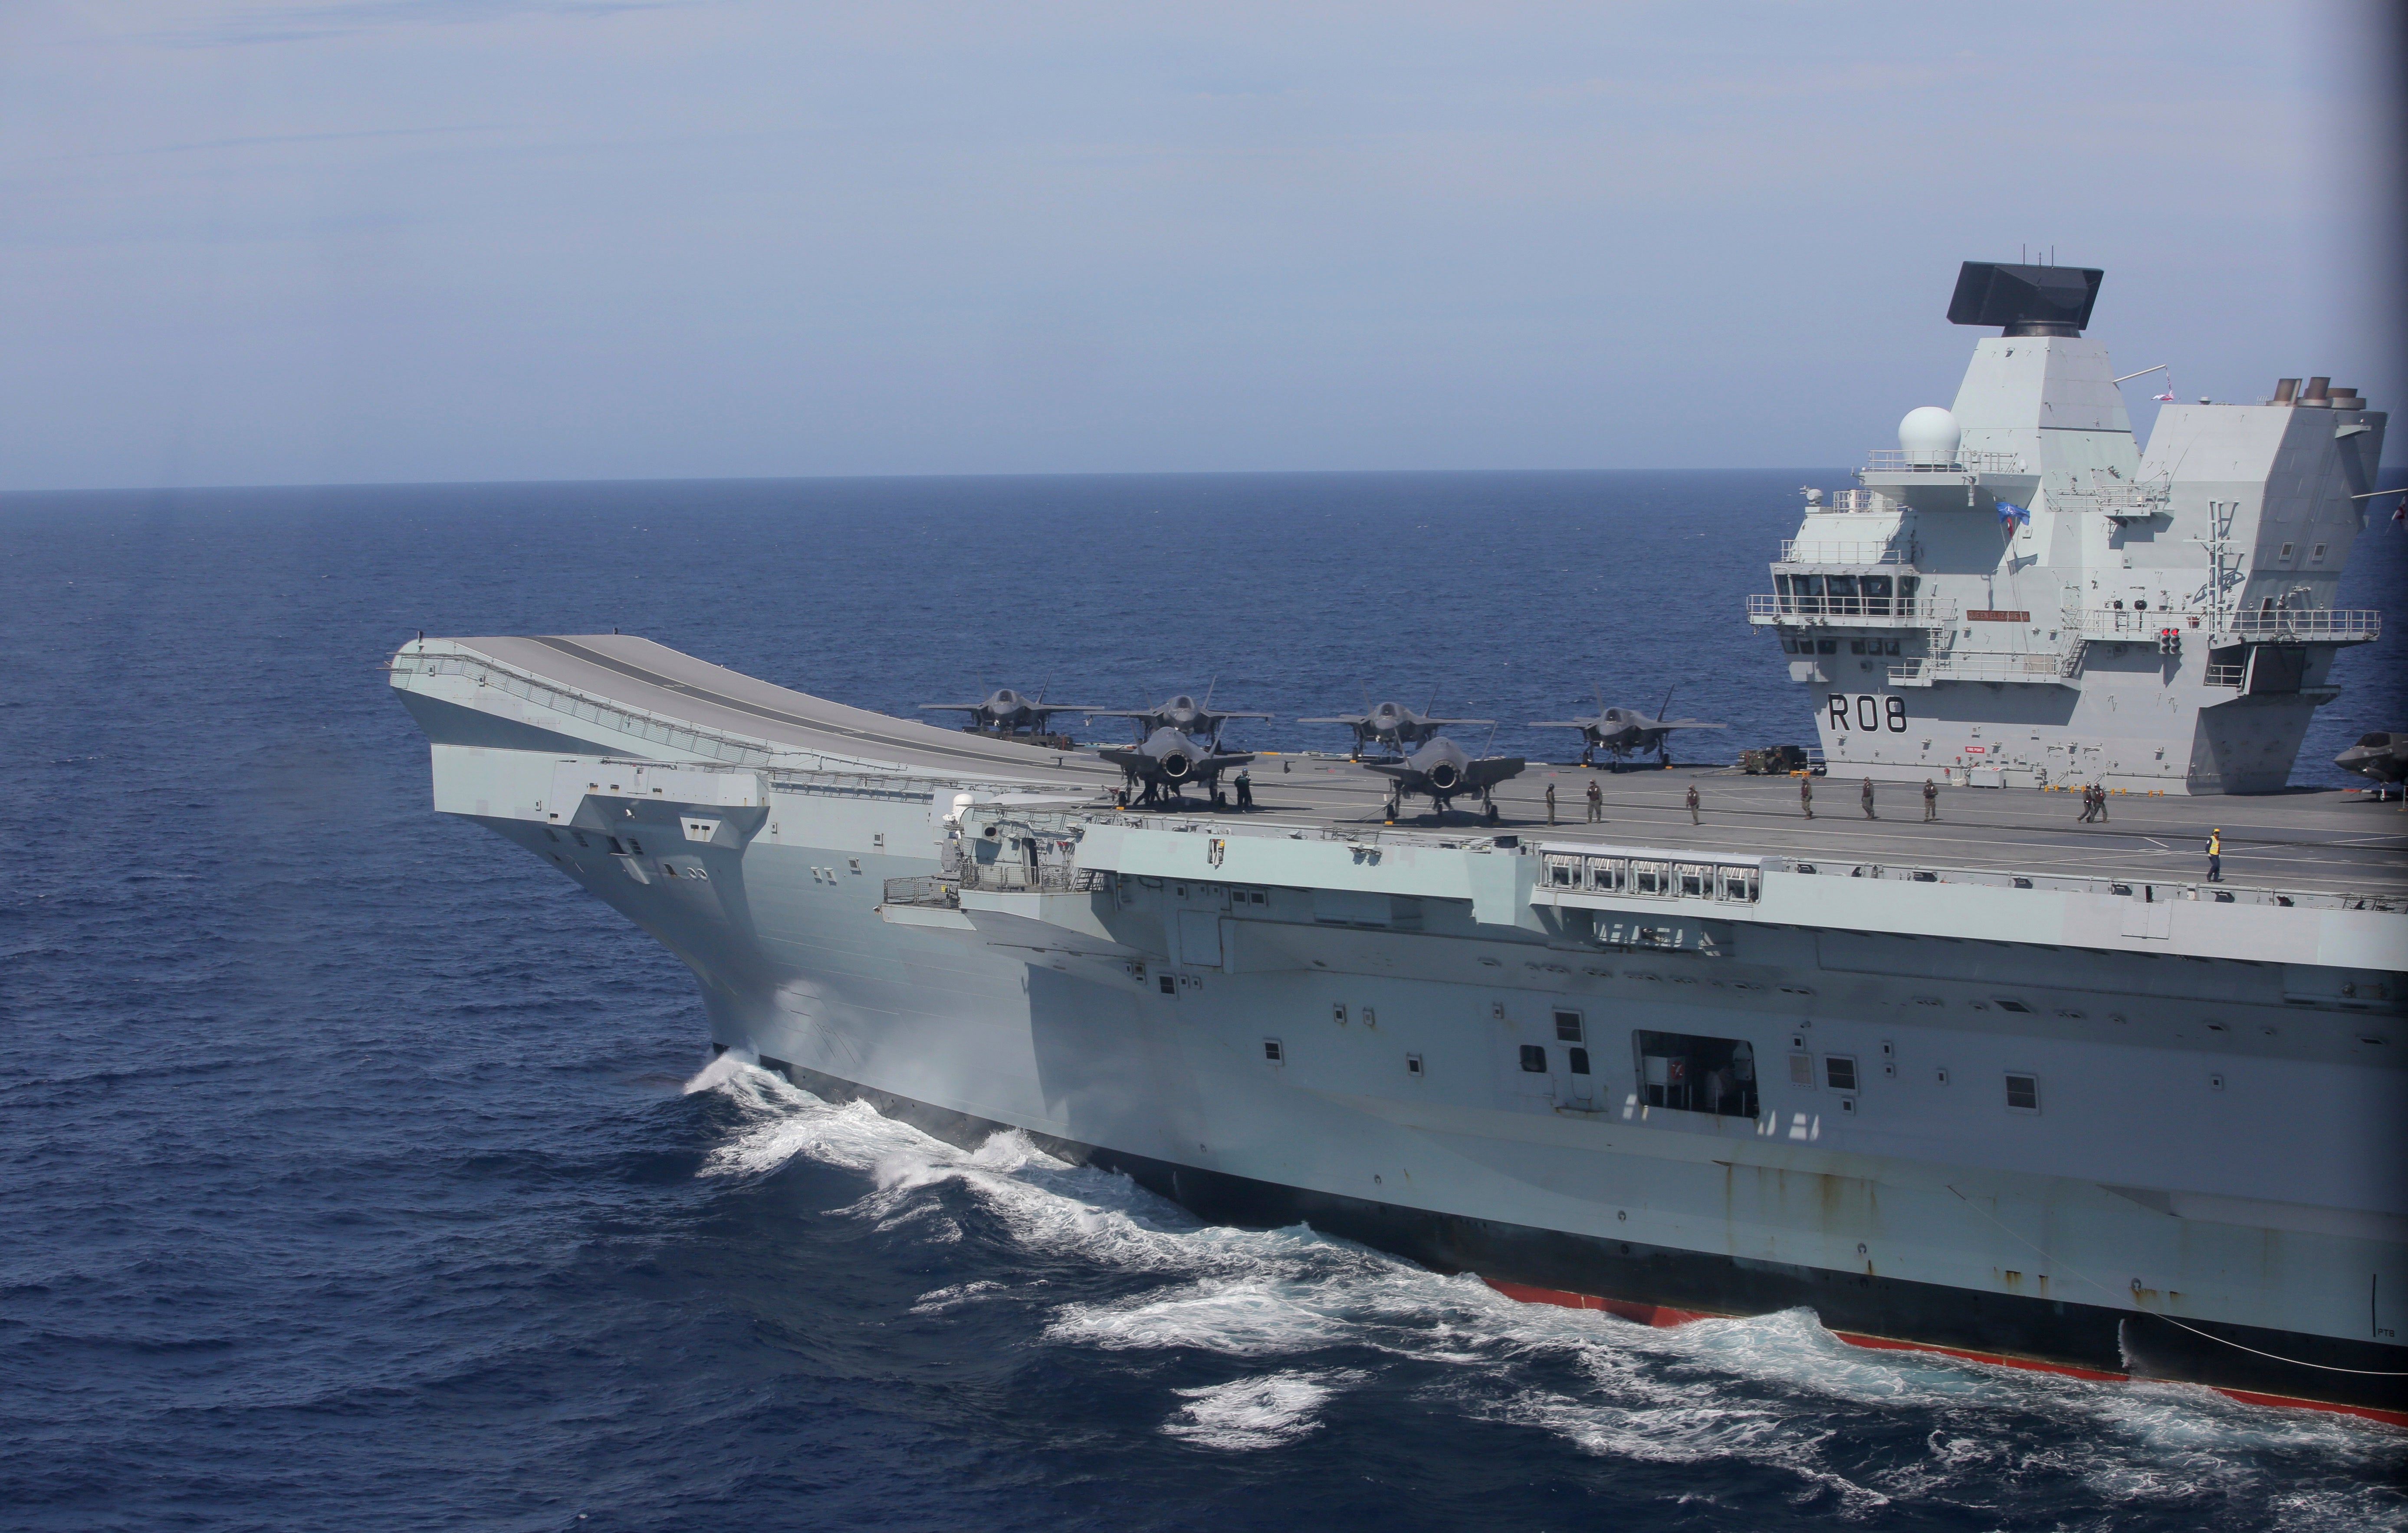 The aircraft carrier HMS Queen Elizabeth